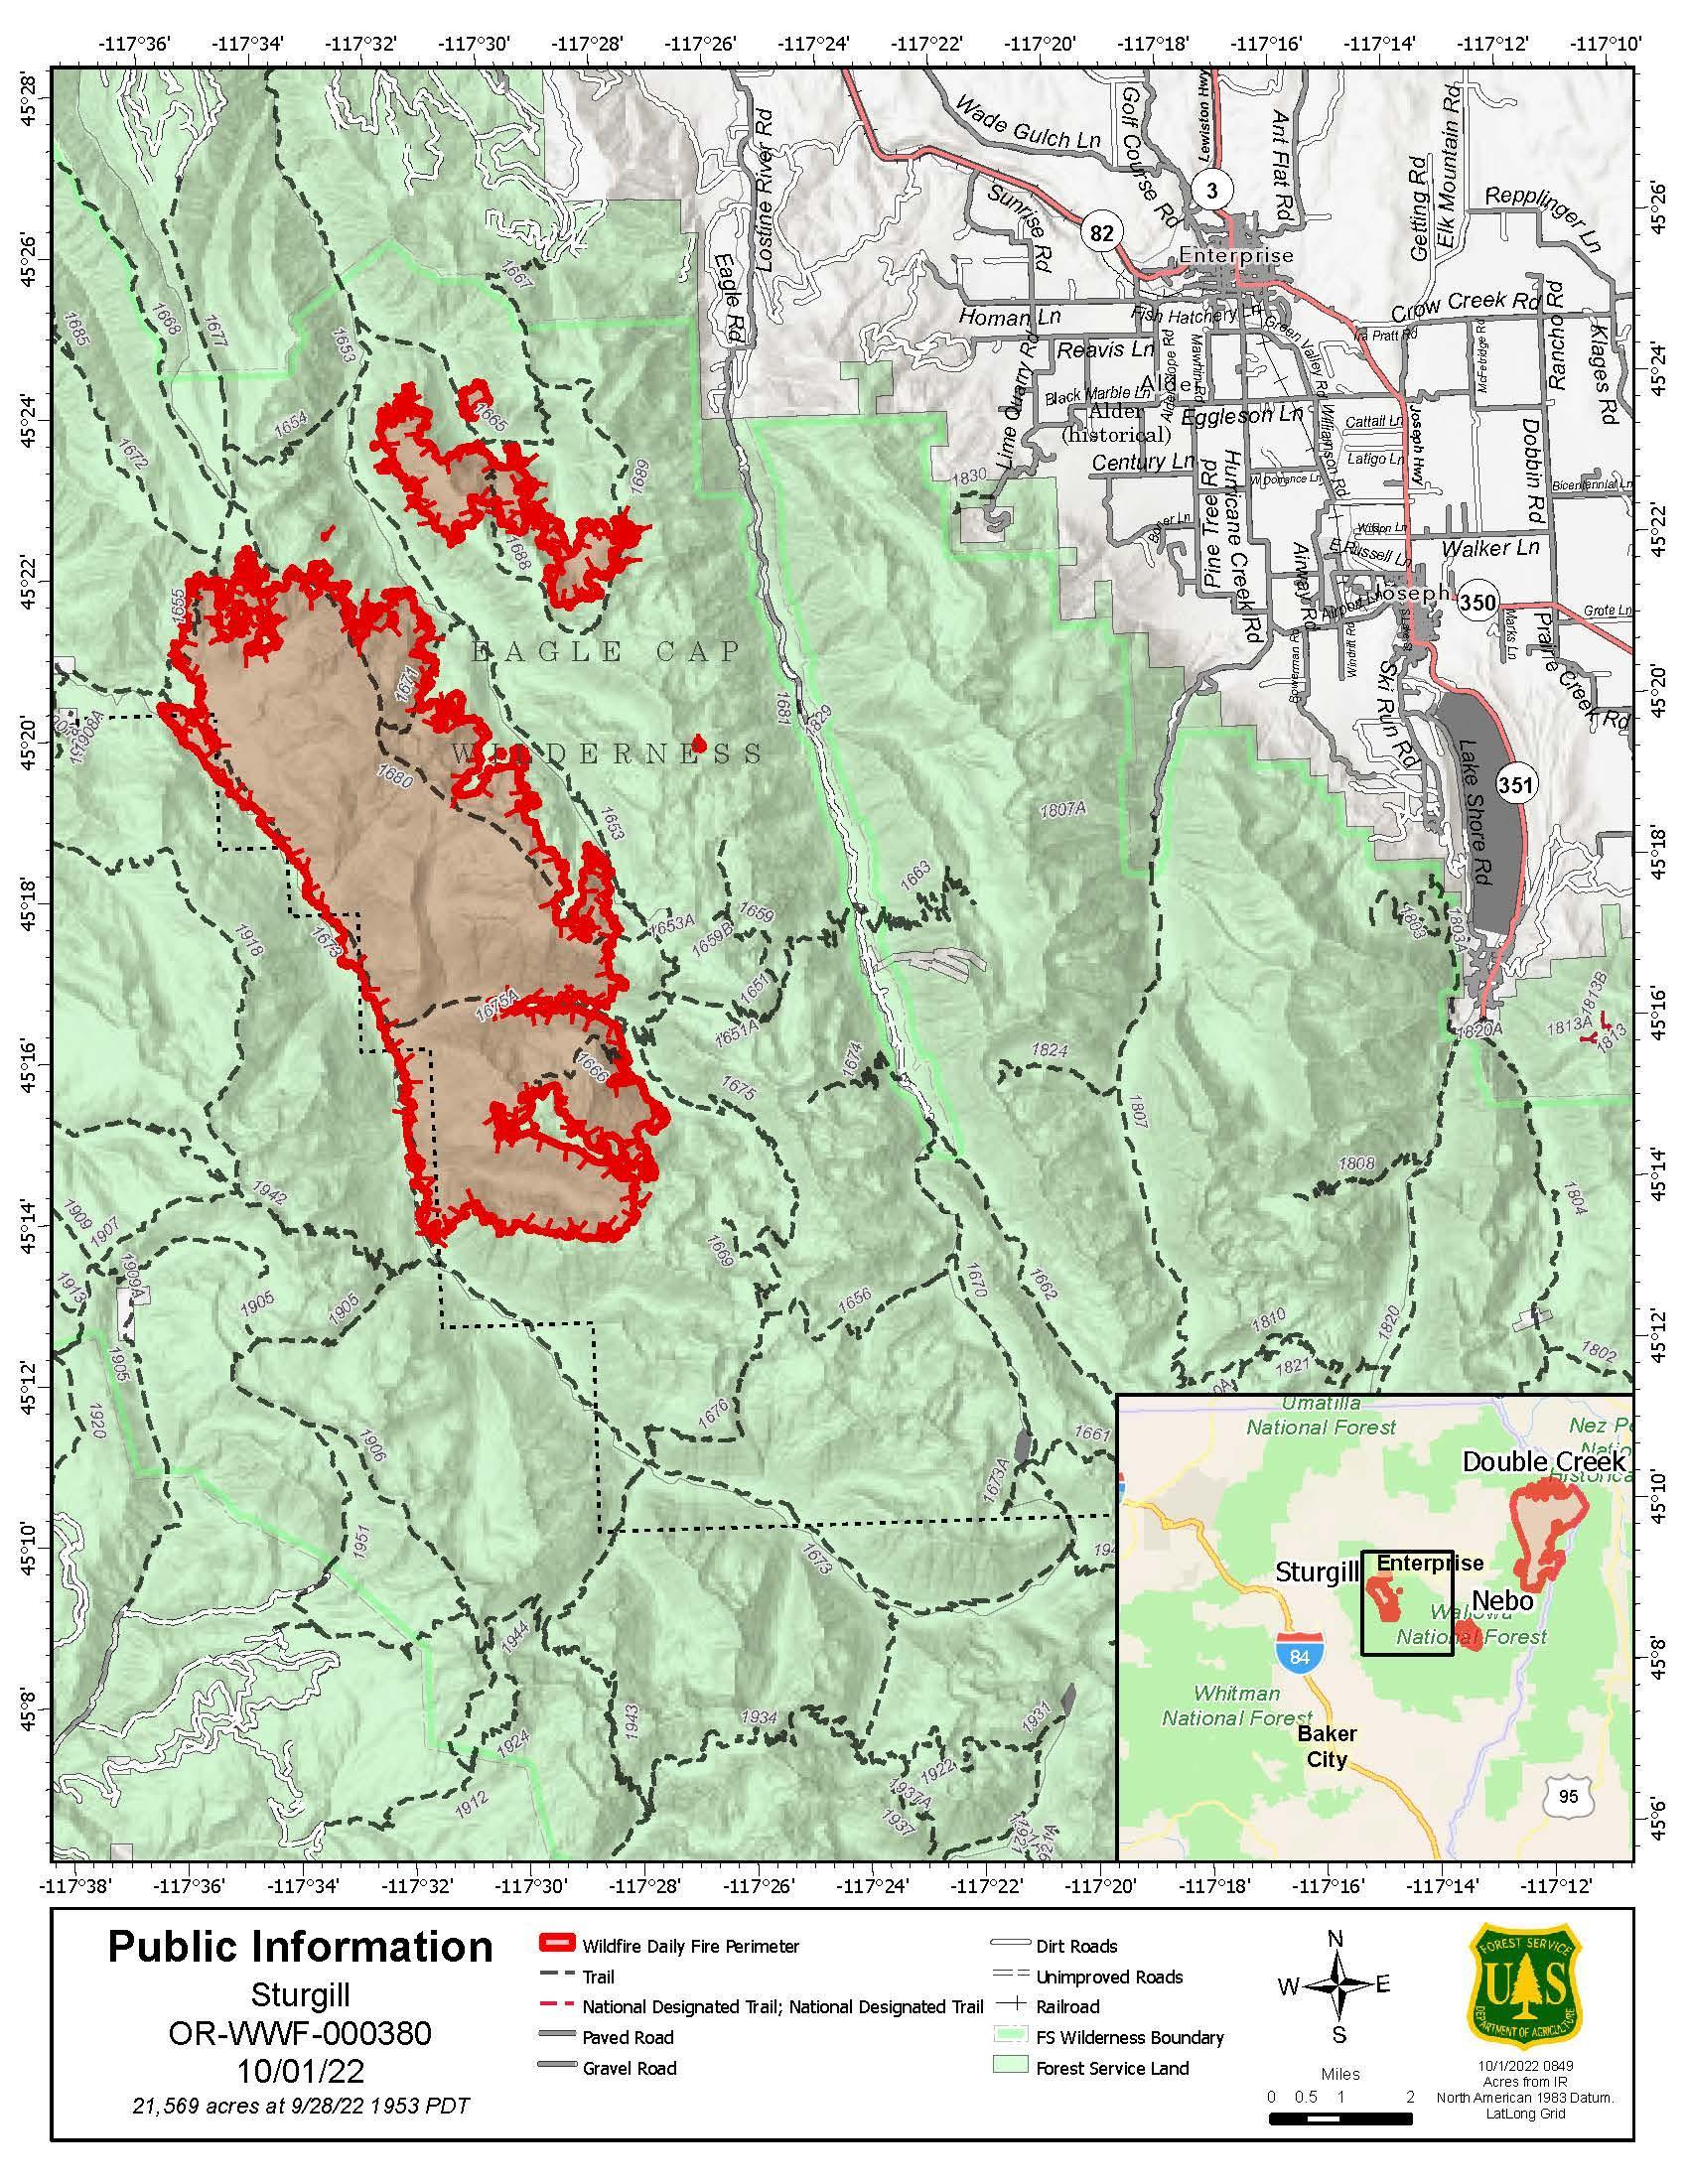 Sturgill Fire Map - 20221001